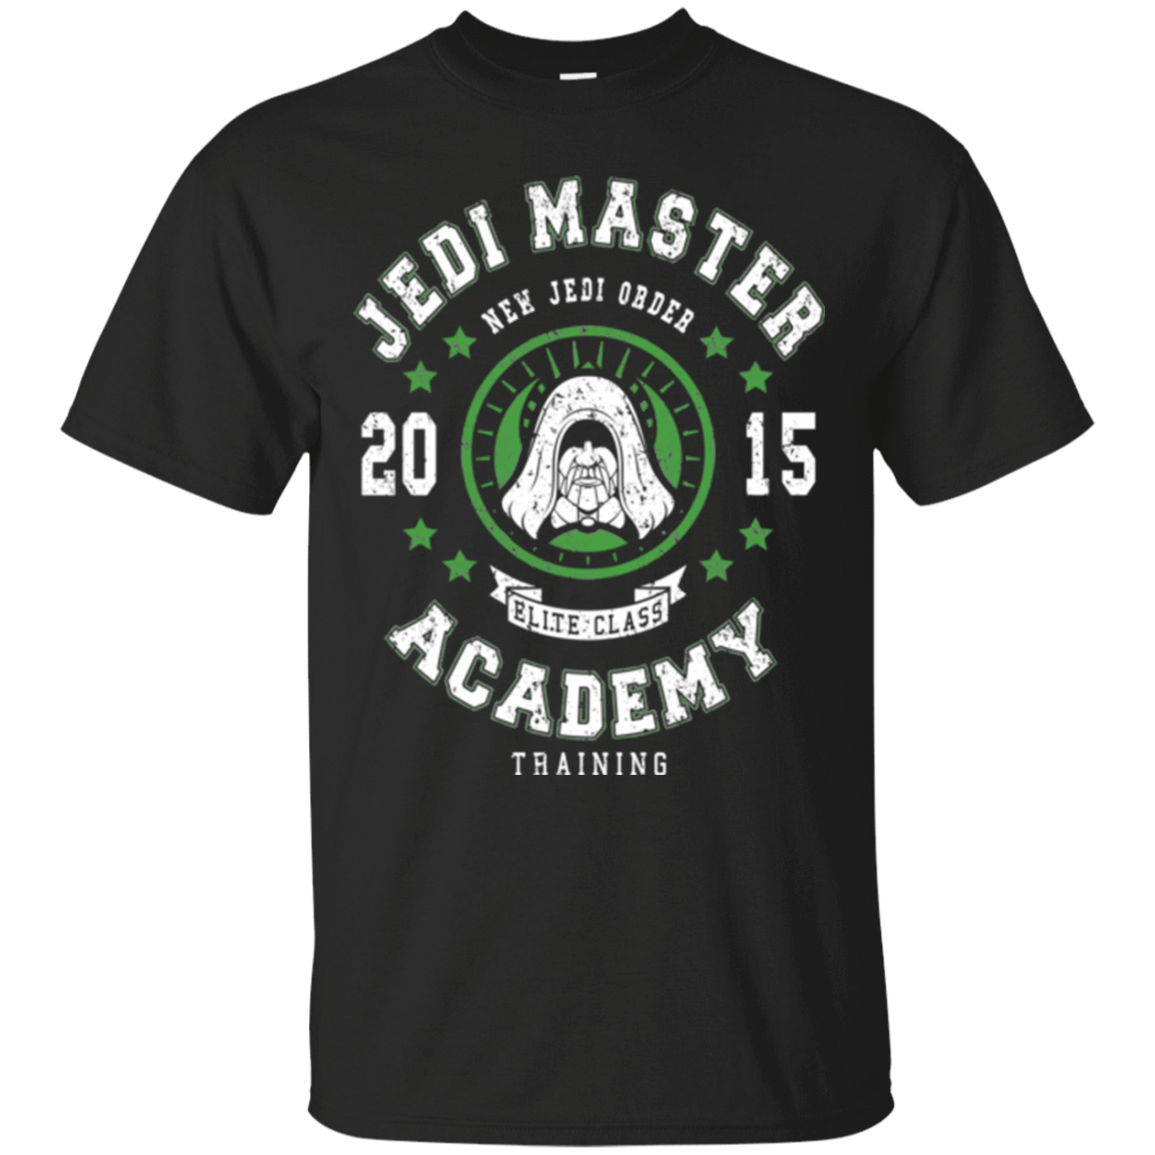 T-Shirts Black / Small Jedi Master Academy 15 T-Shirt